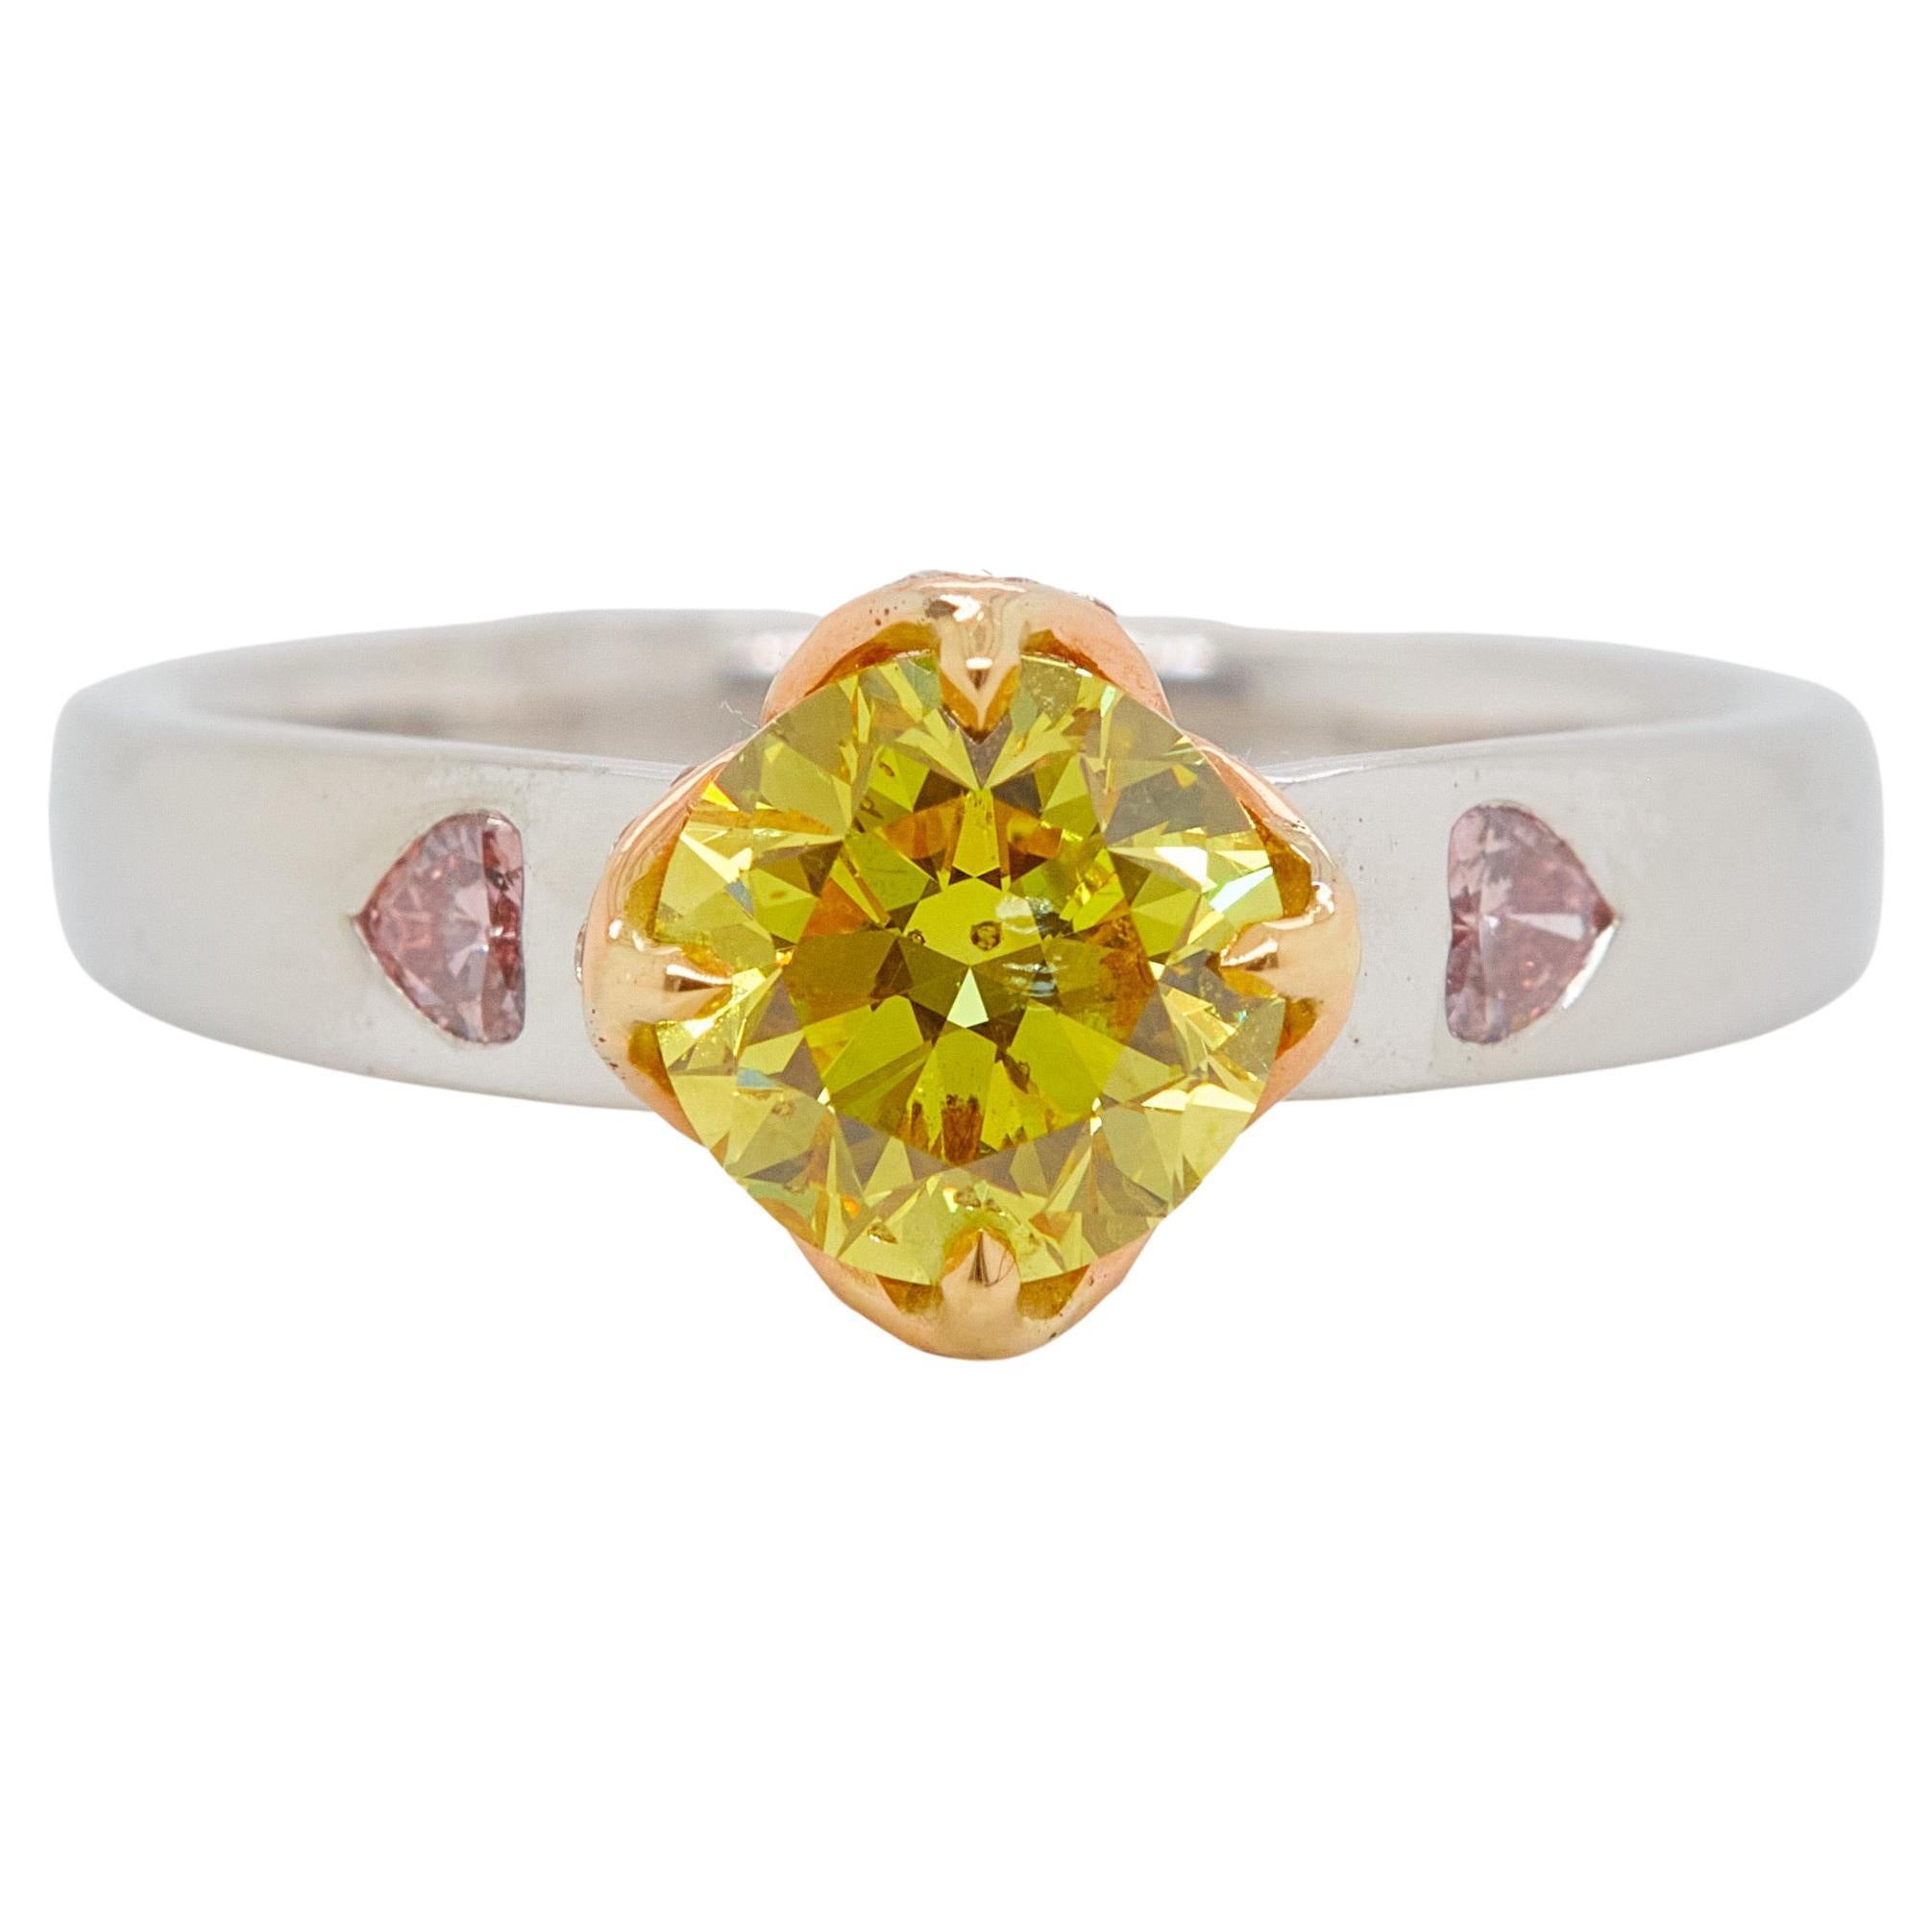 1.30 Carat Fancy Vivid Yellow Diamond Ring With Heart-shape pink Diamonds